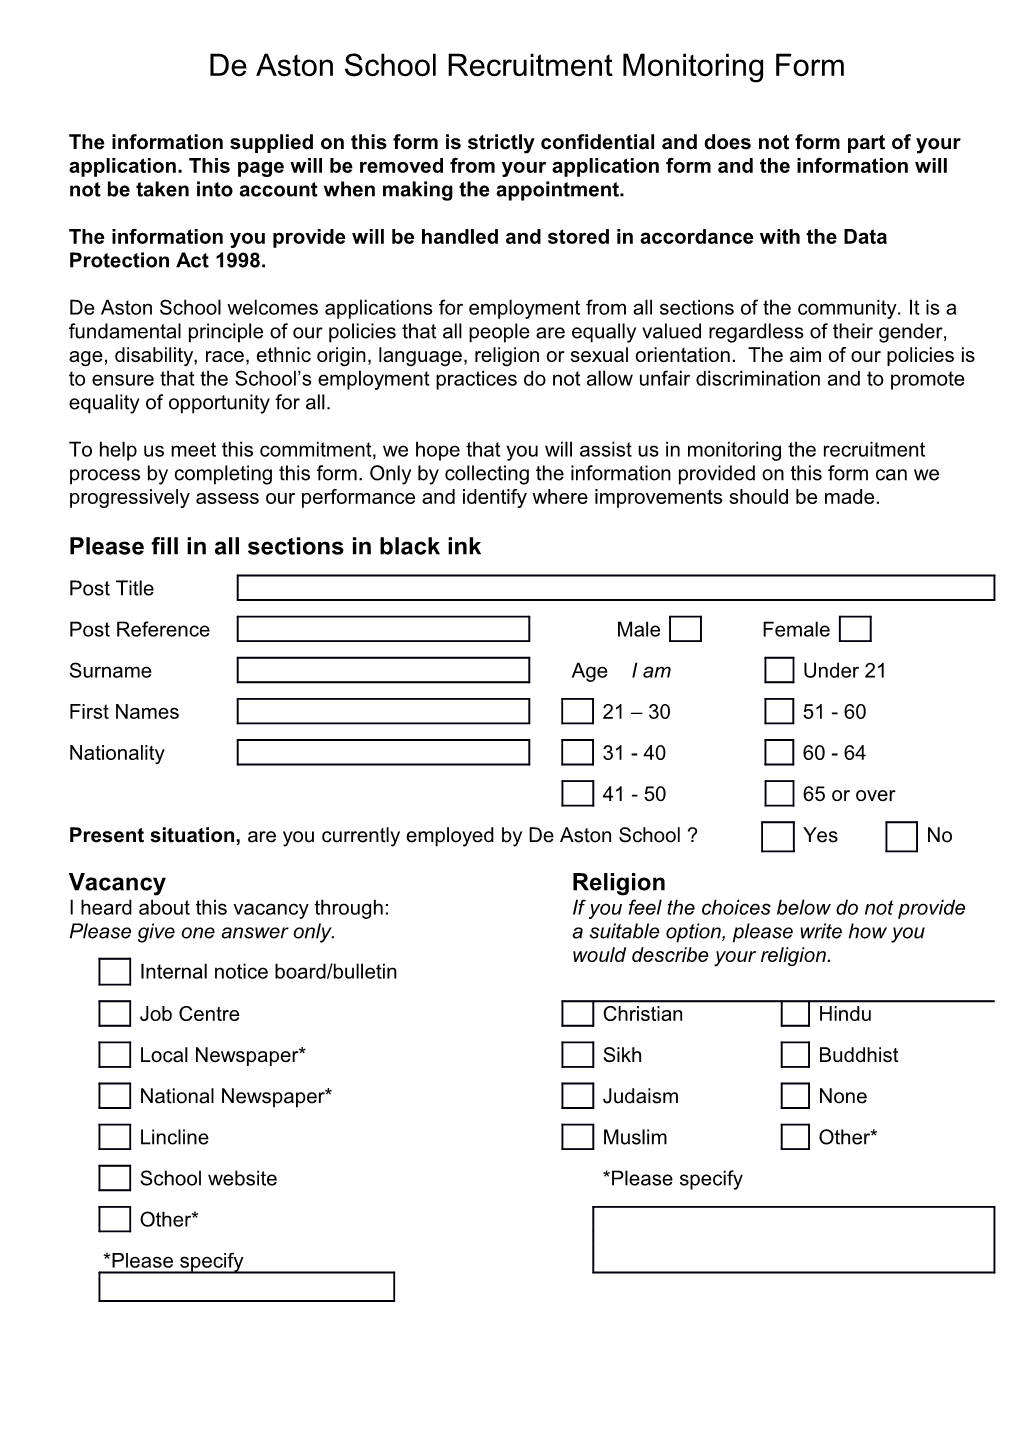 De Aston School Recruitment Monitoring Form